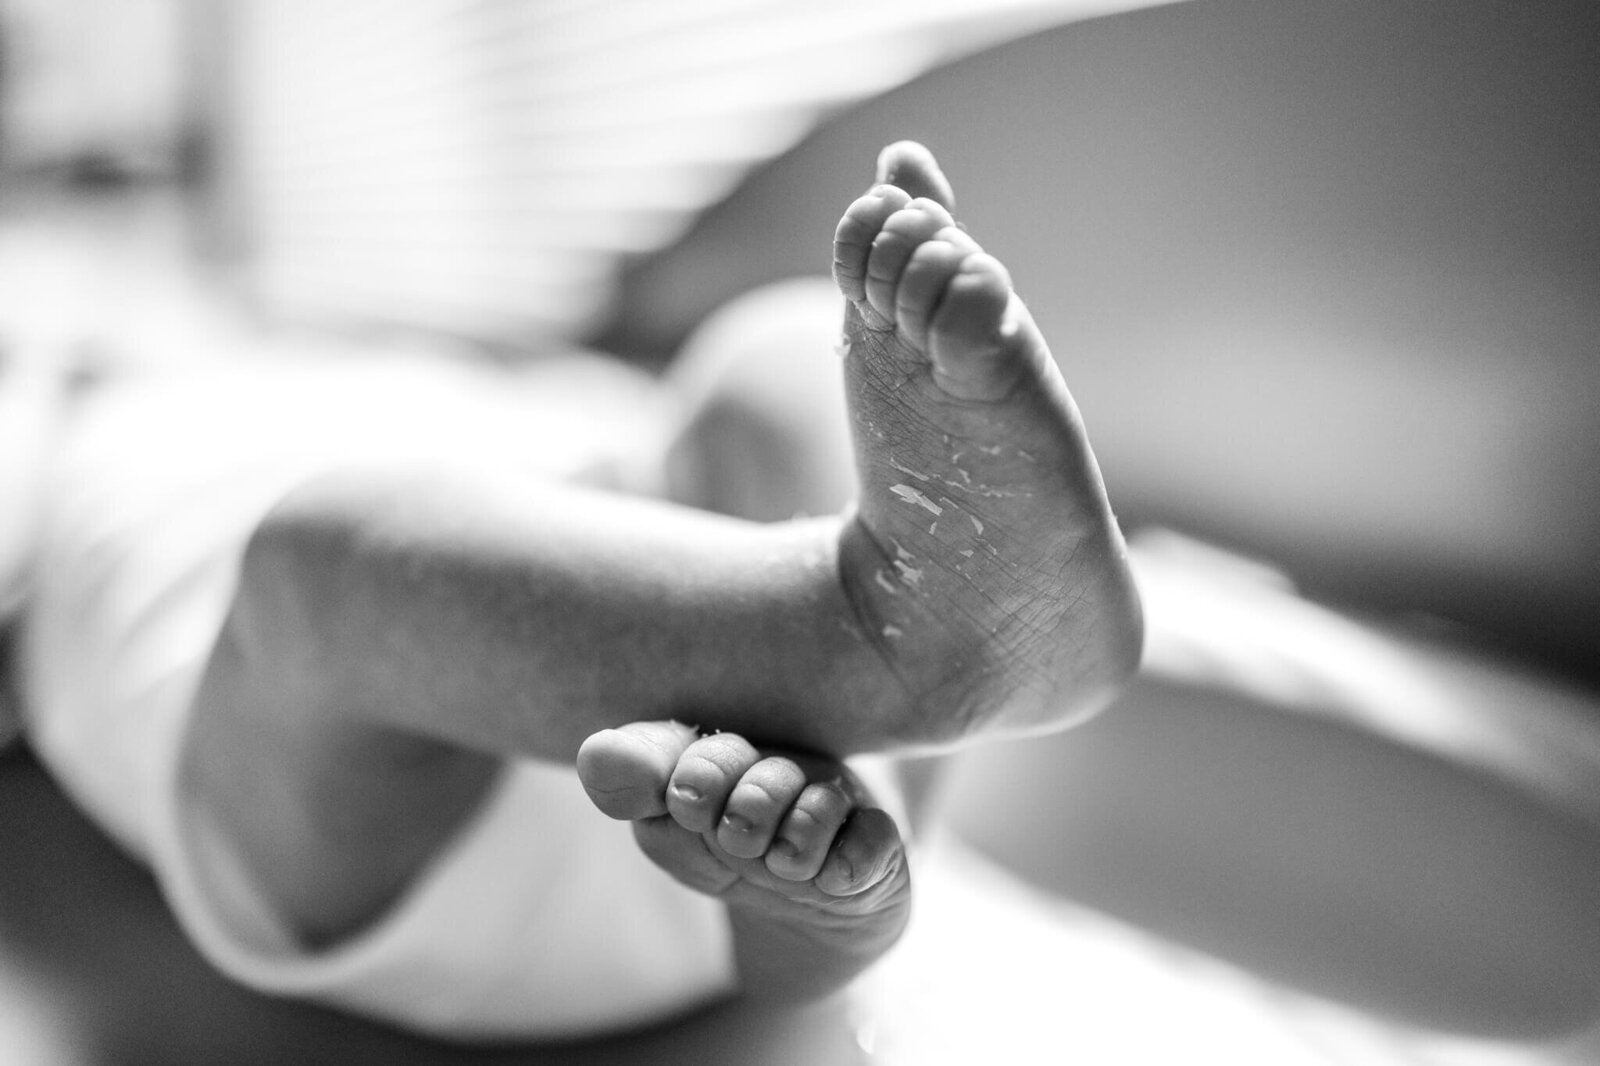 Baby feet with flaky newborn skin